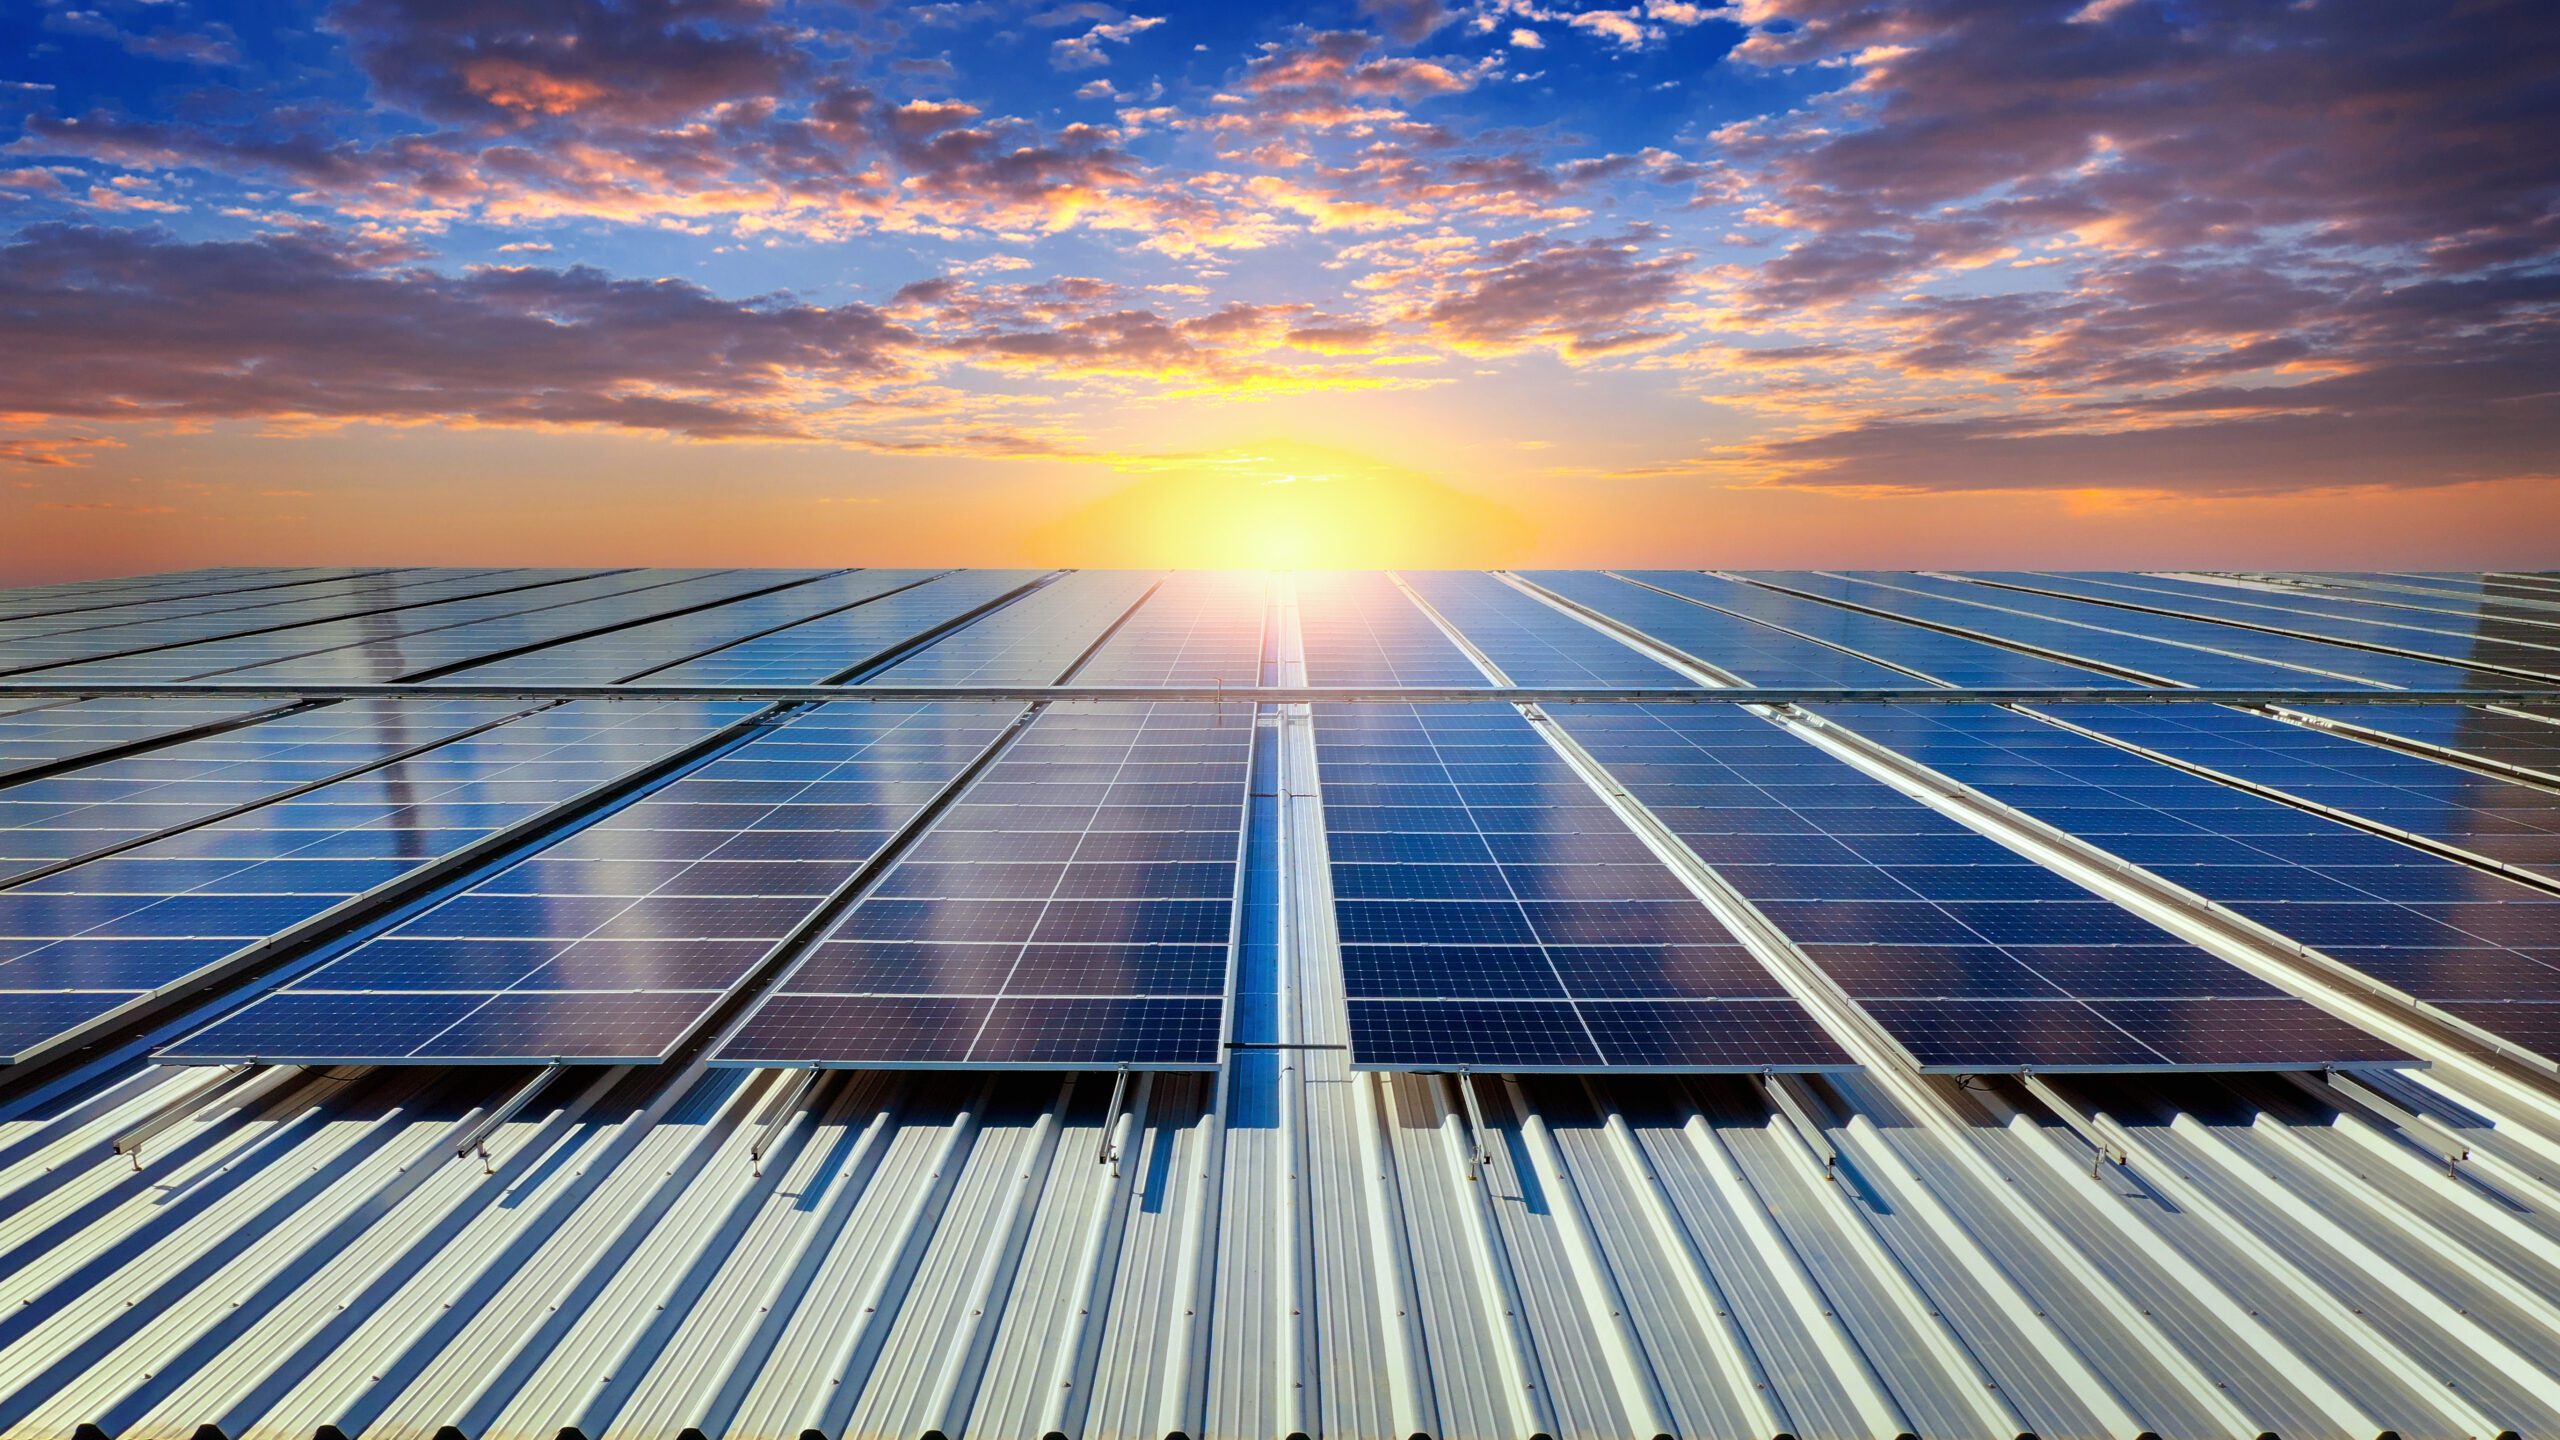 Panel surya fakta atau mitos. Solar panel